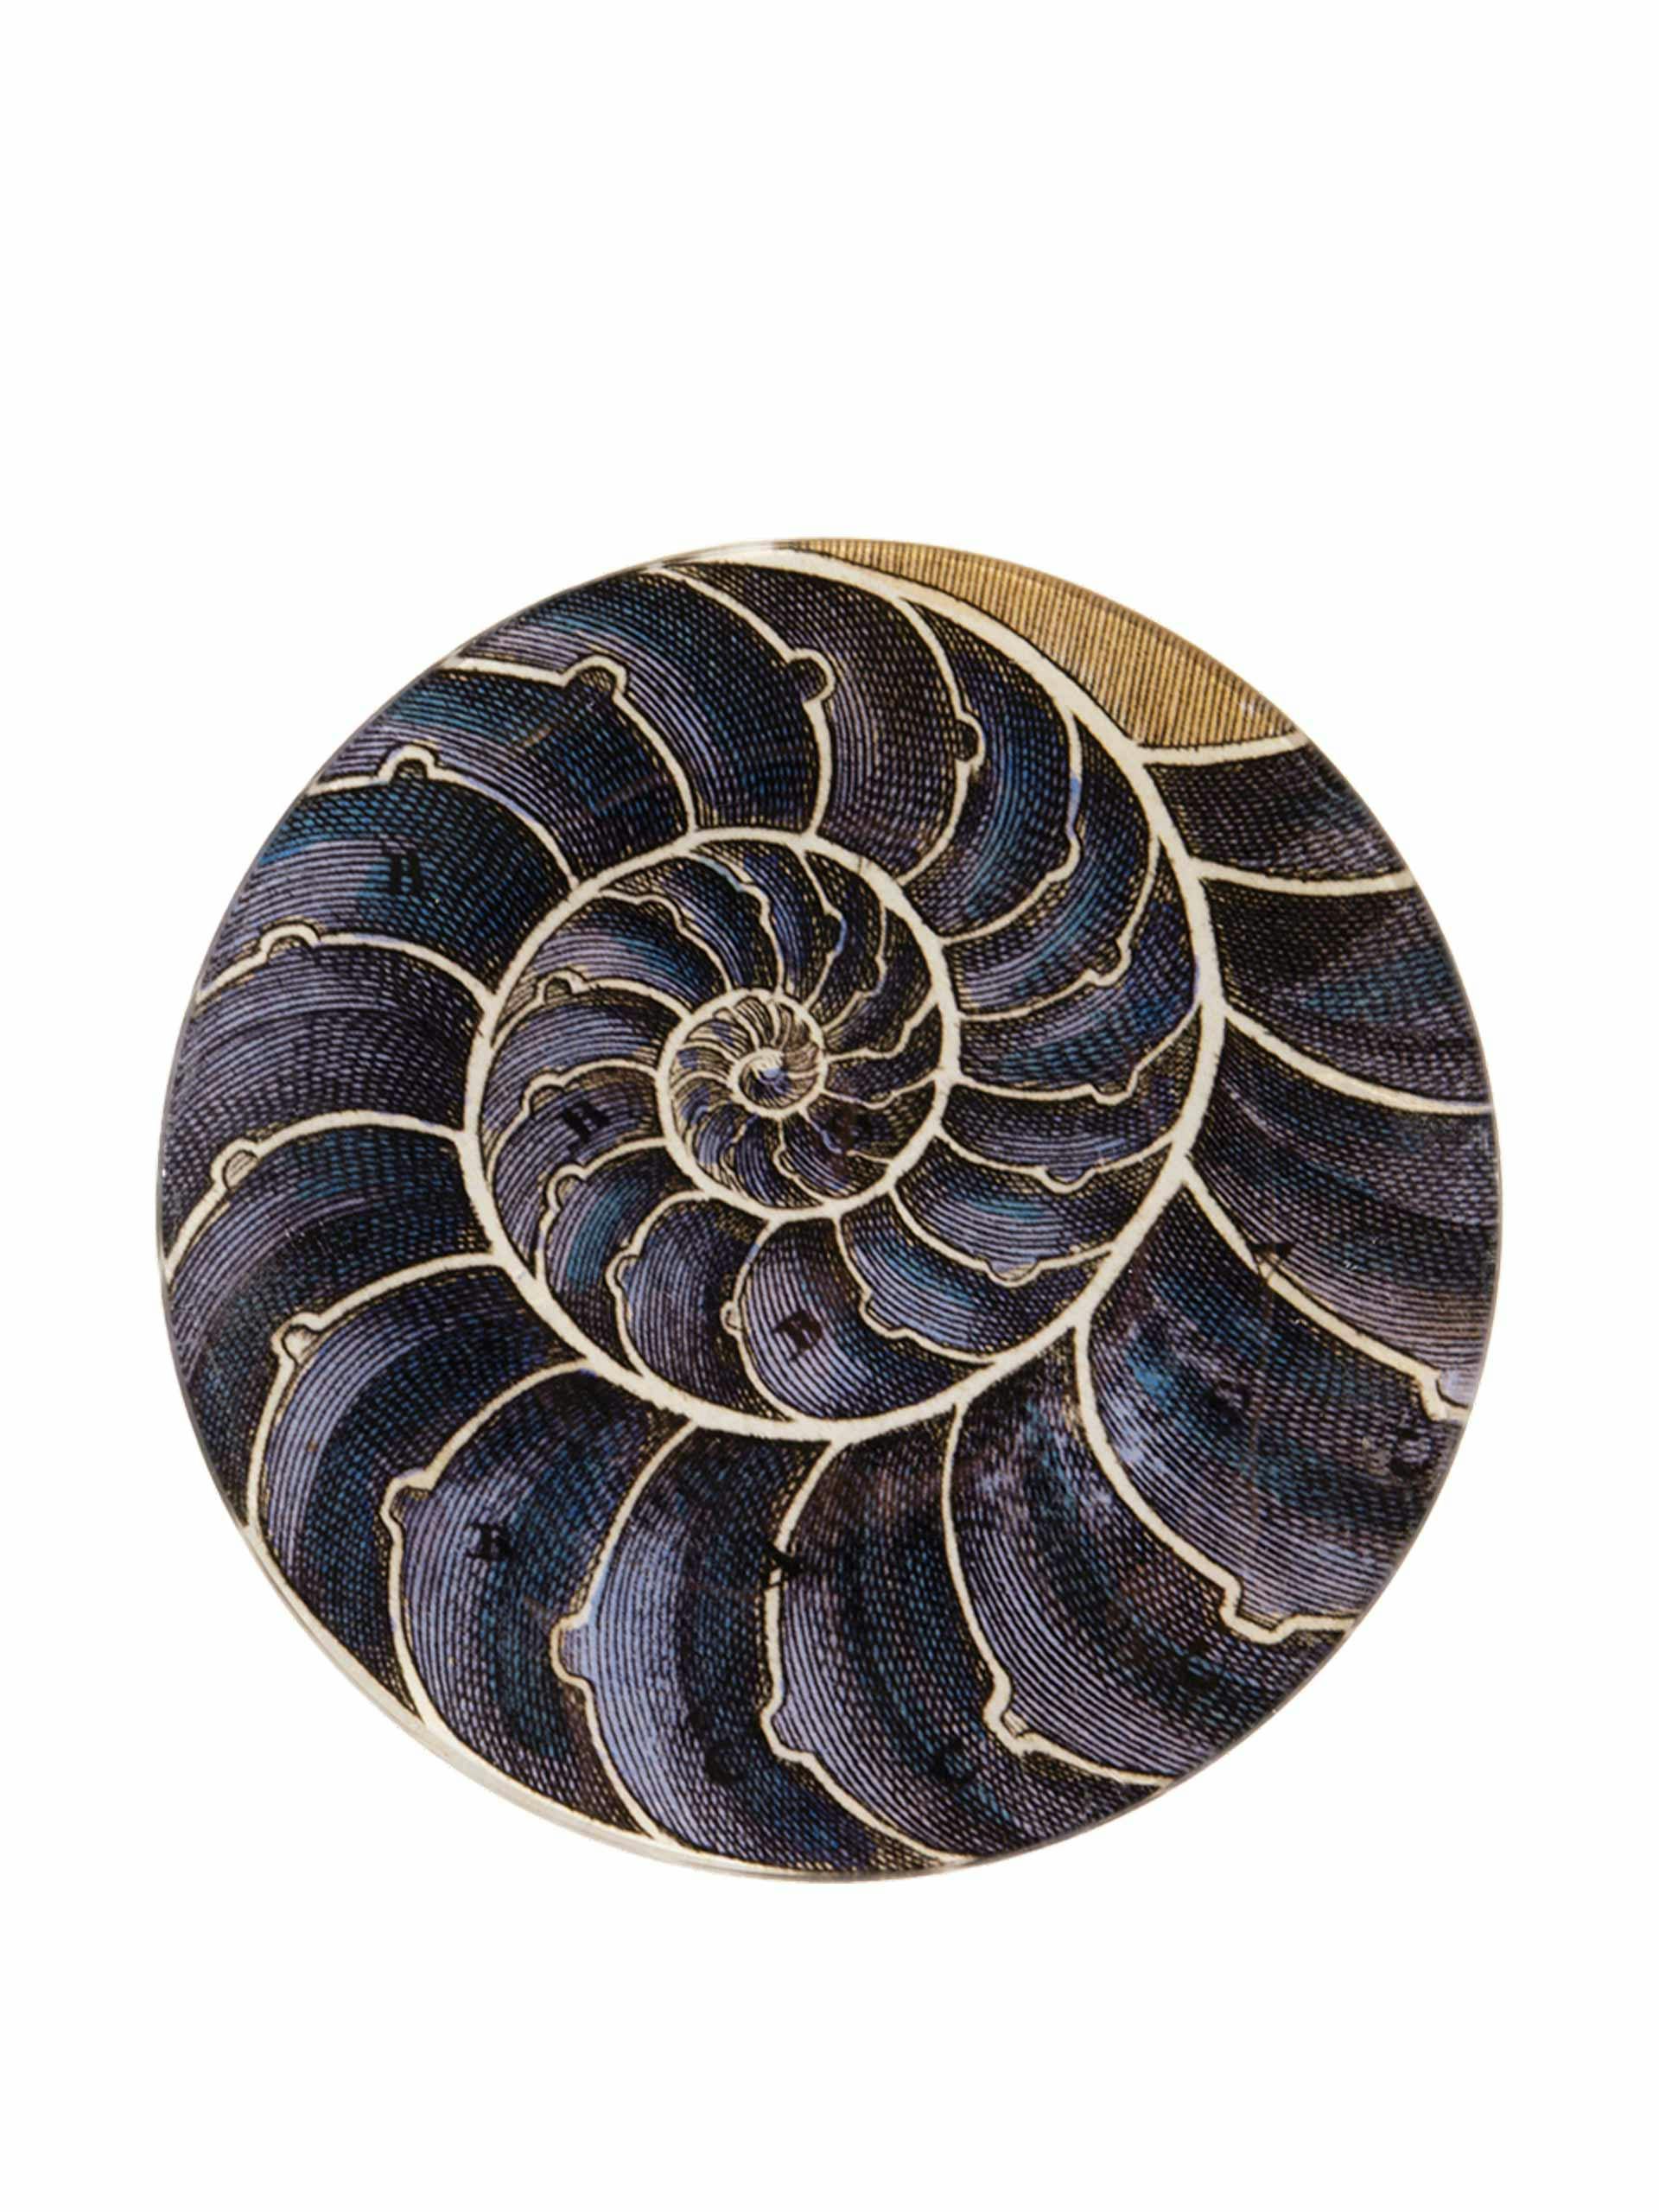 Handmade shell plate